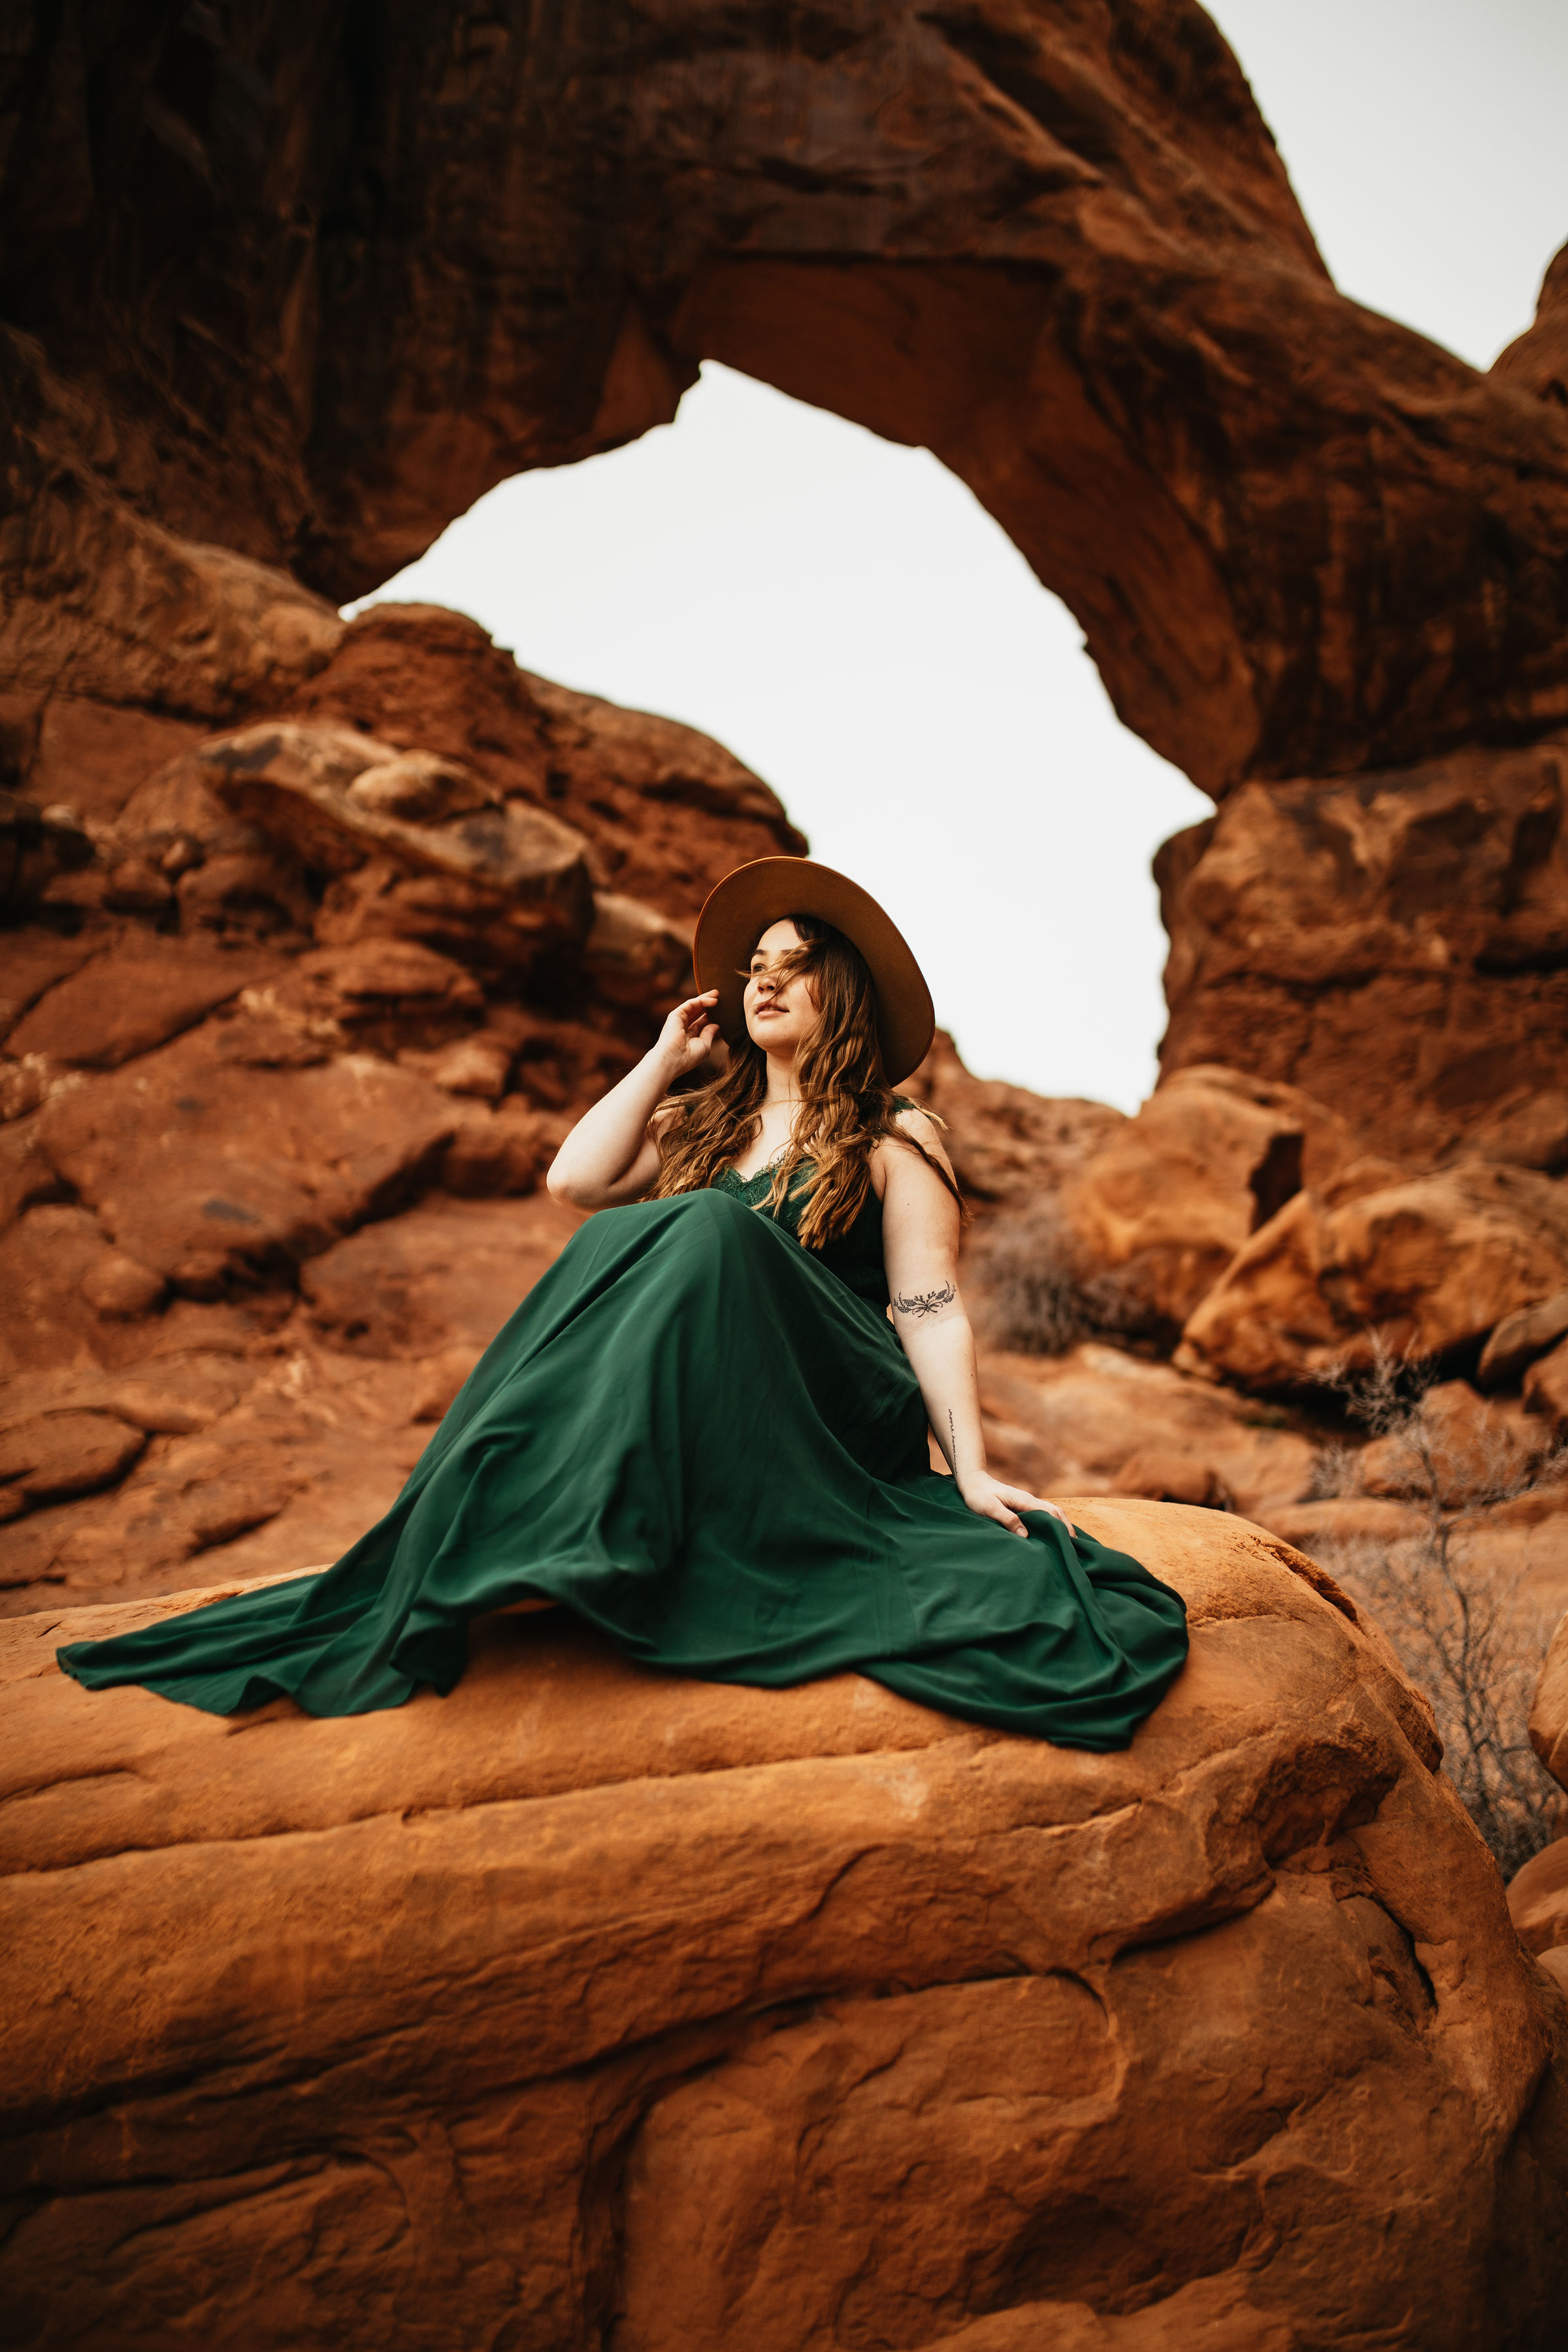 Emerald Green Dress in desertscape scenery